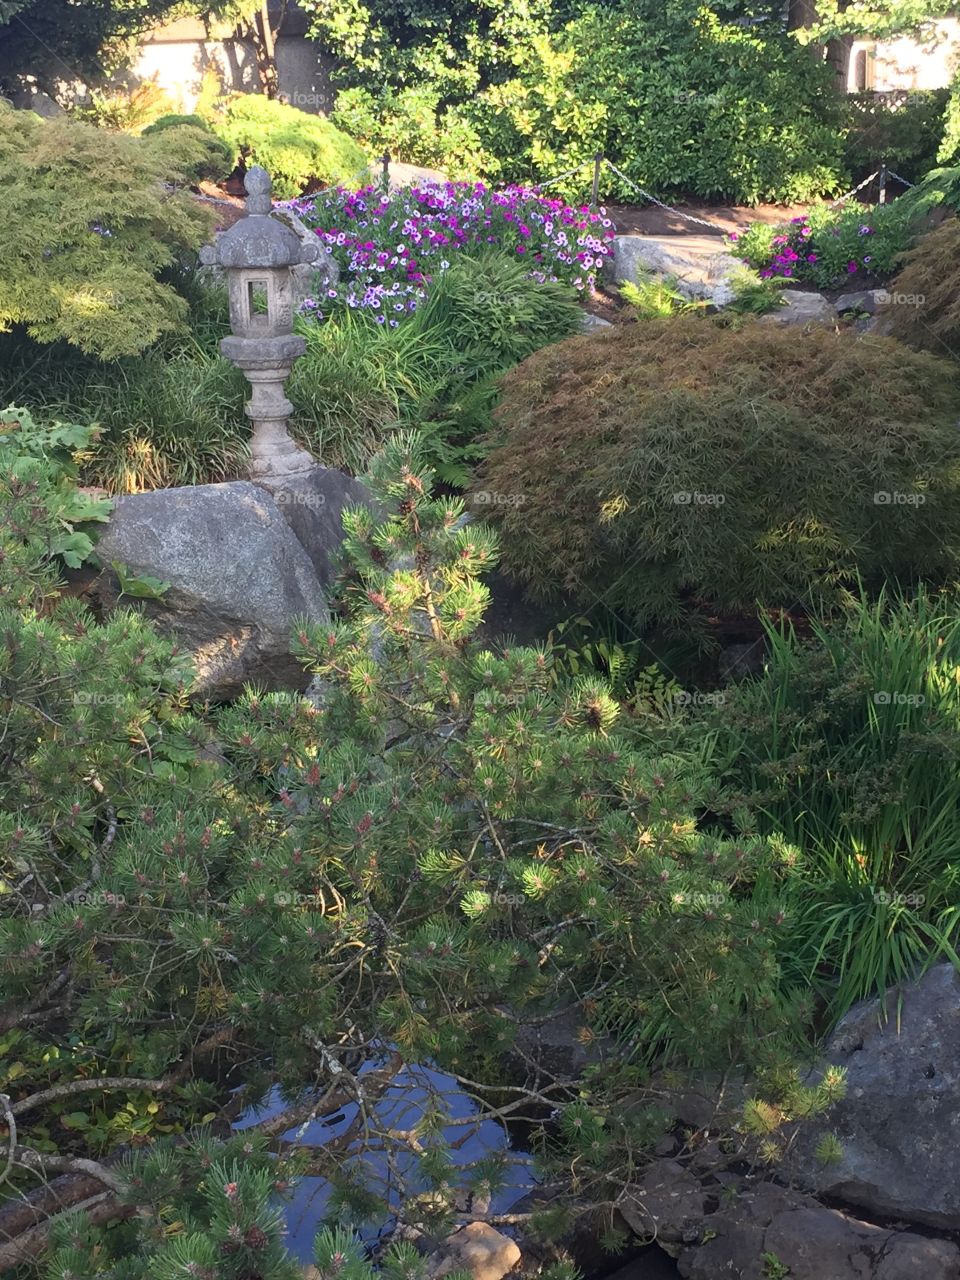 Miniature pagoda in the Main quarry garden at Queen Elizabeth Park in Vancouver, British Columbia 